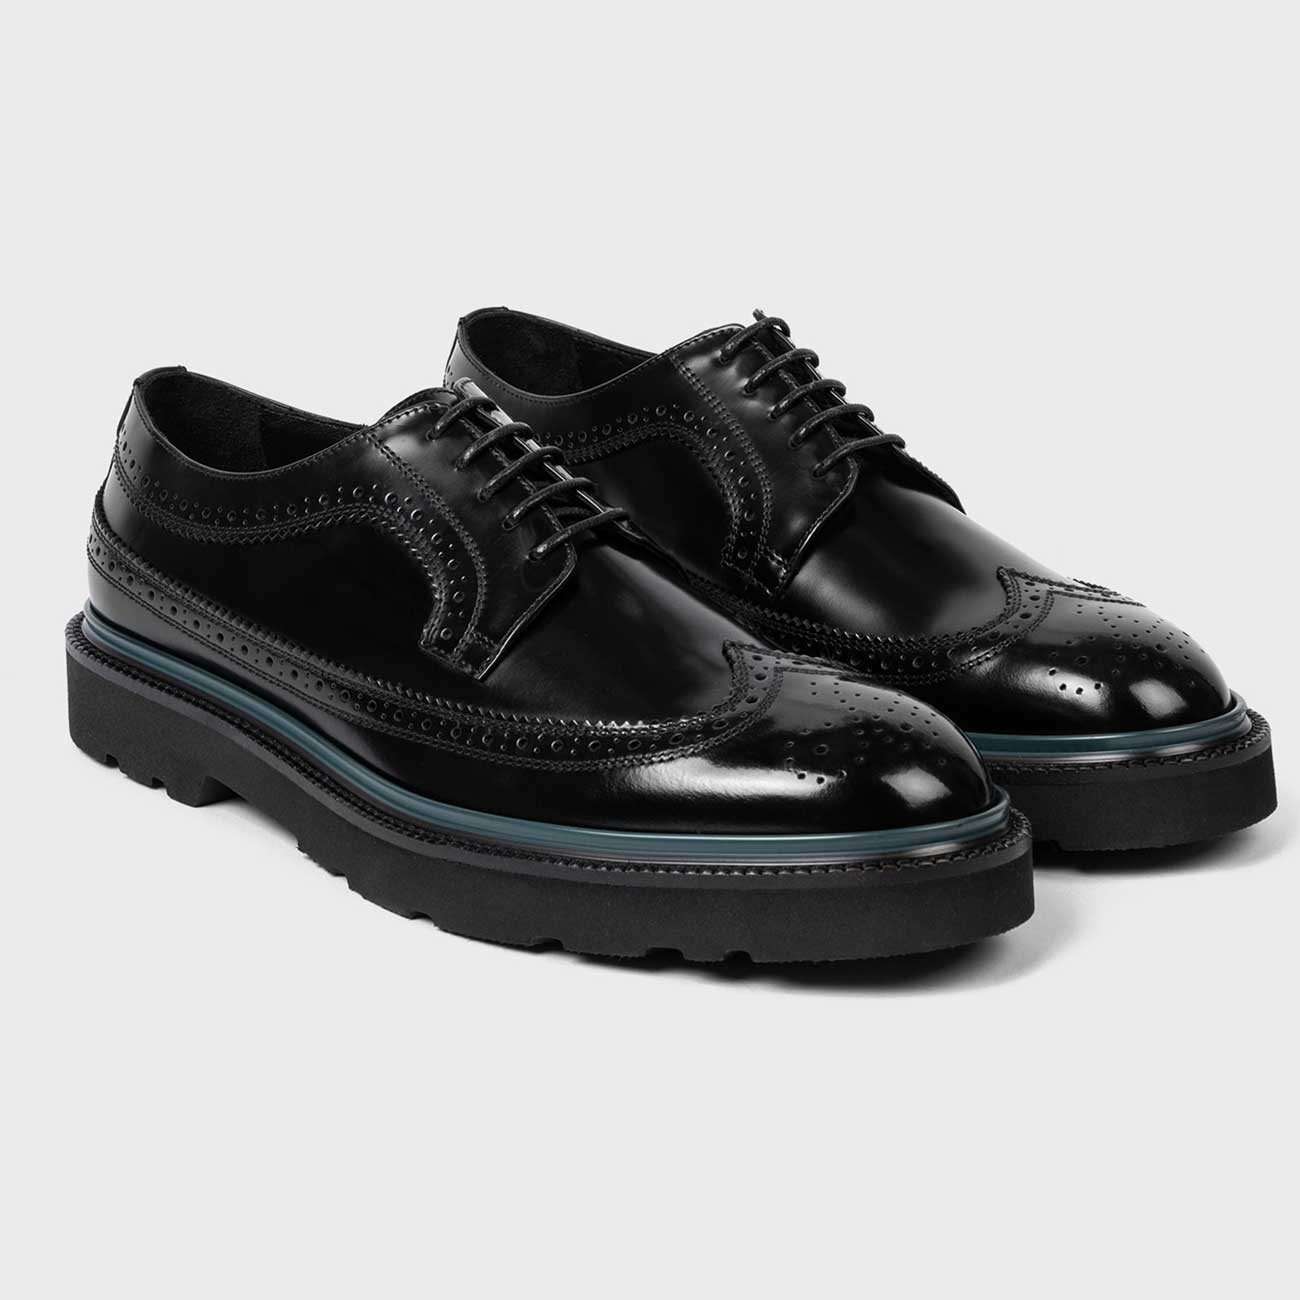 Zapatos negros brogue 'count' paul smith